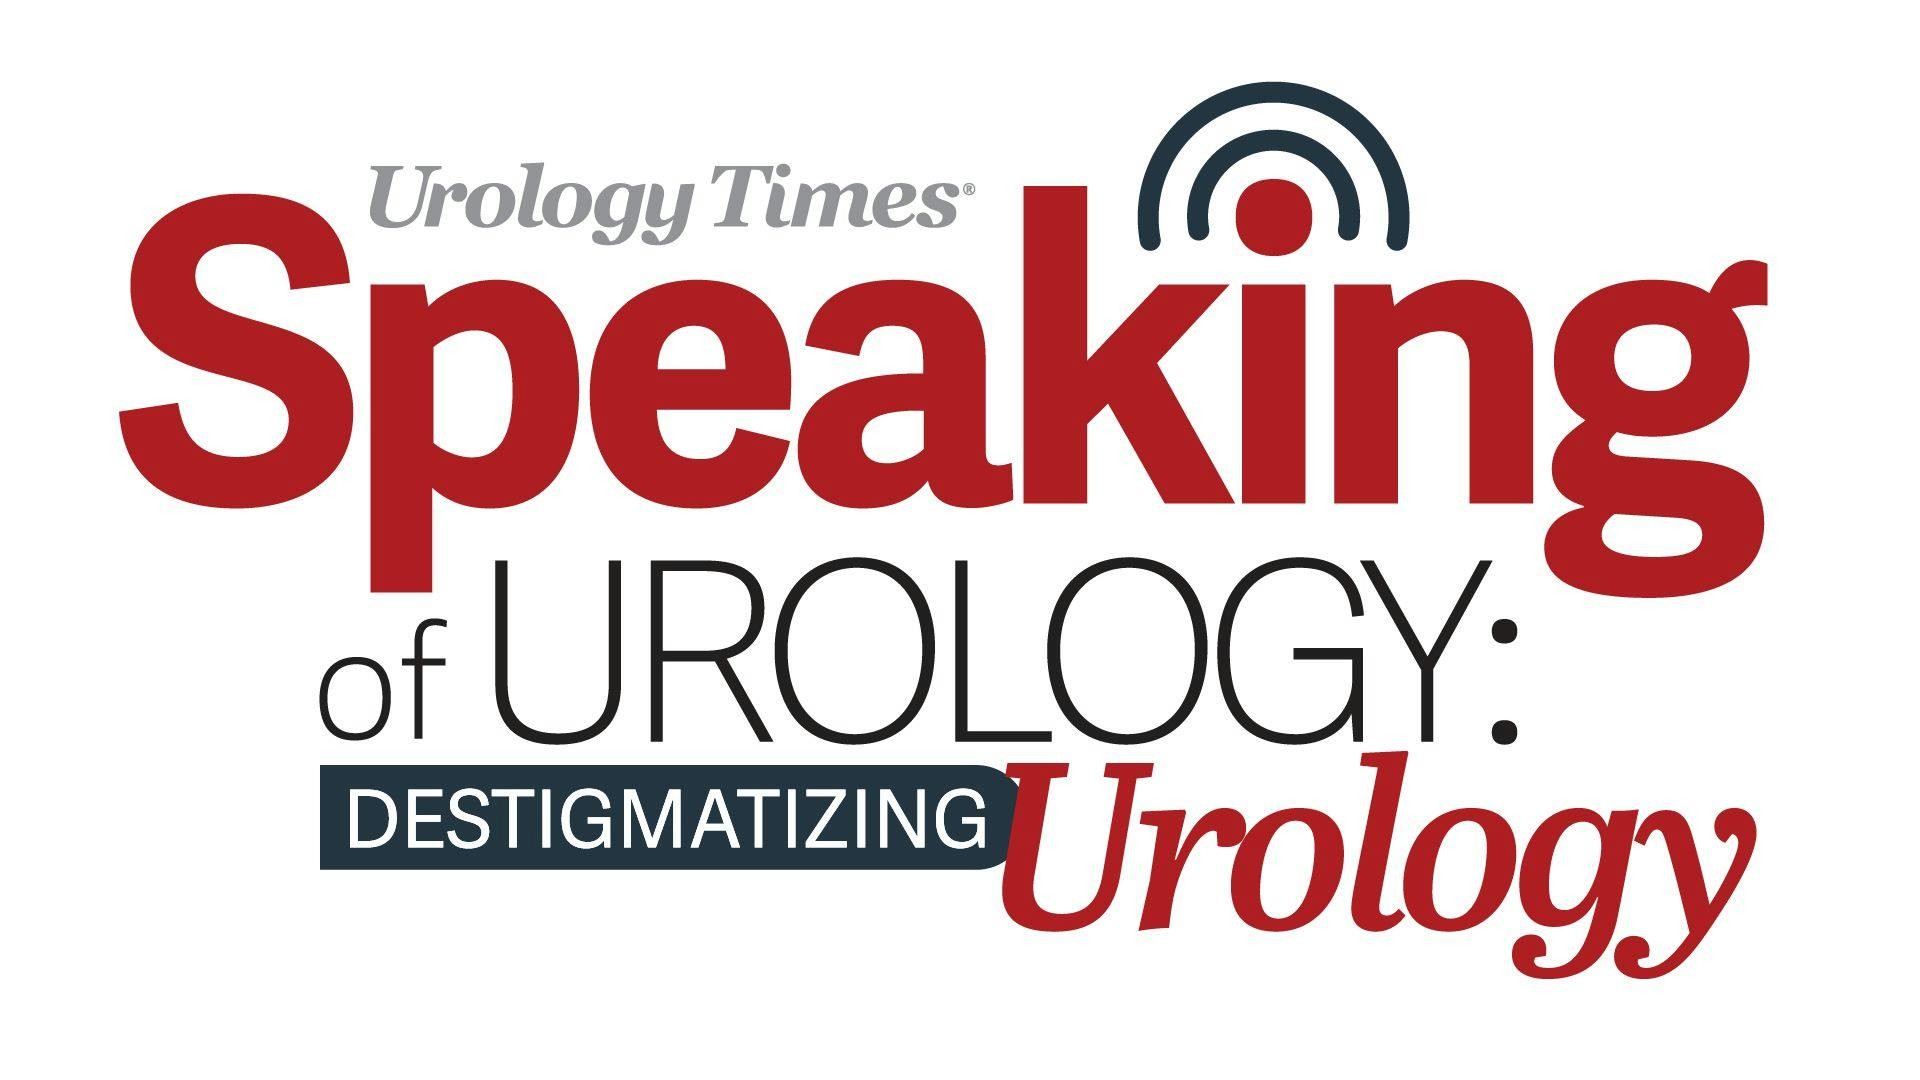 Destigmatizing Urology: Dr. Winter discusses STDs/STIs